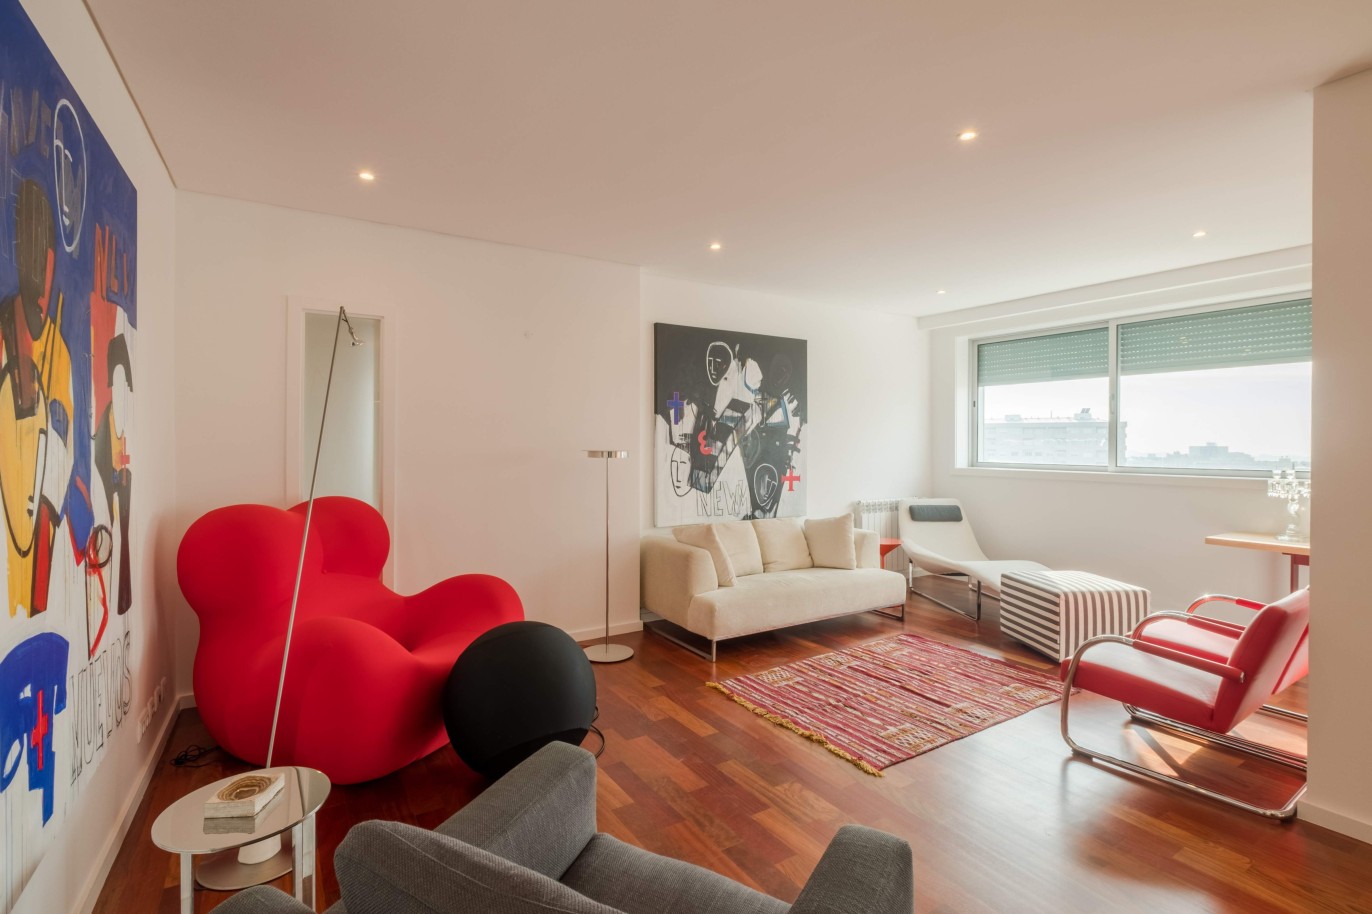 Apartamento T3 para venda, no Porto, junto à Boavista, Portugal_259259